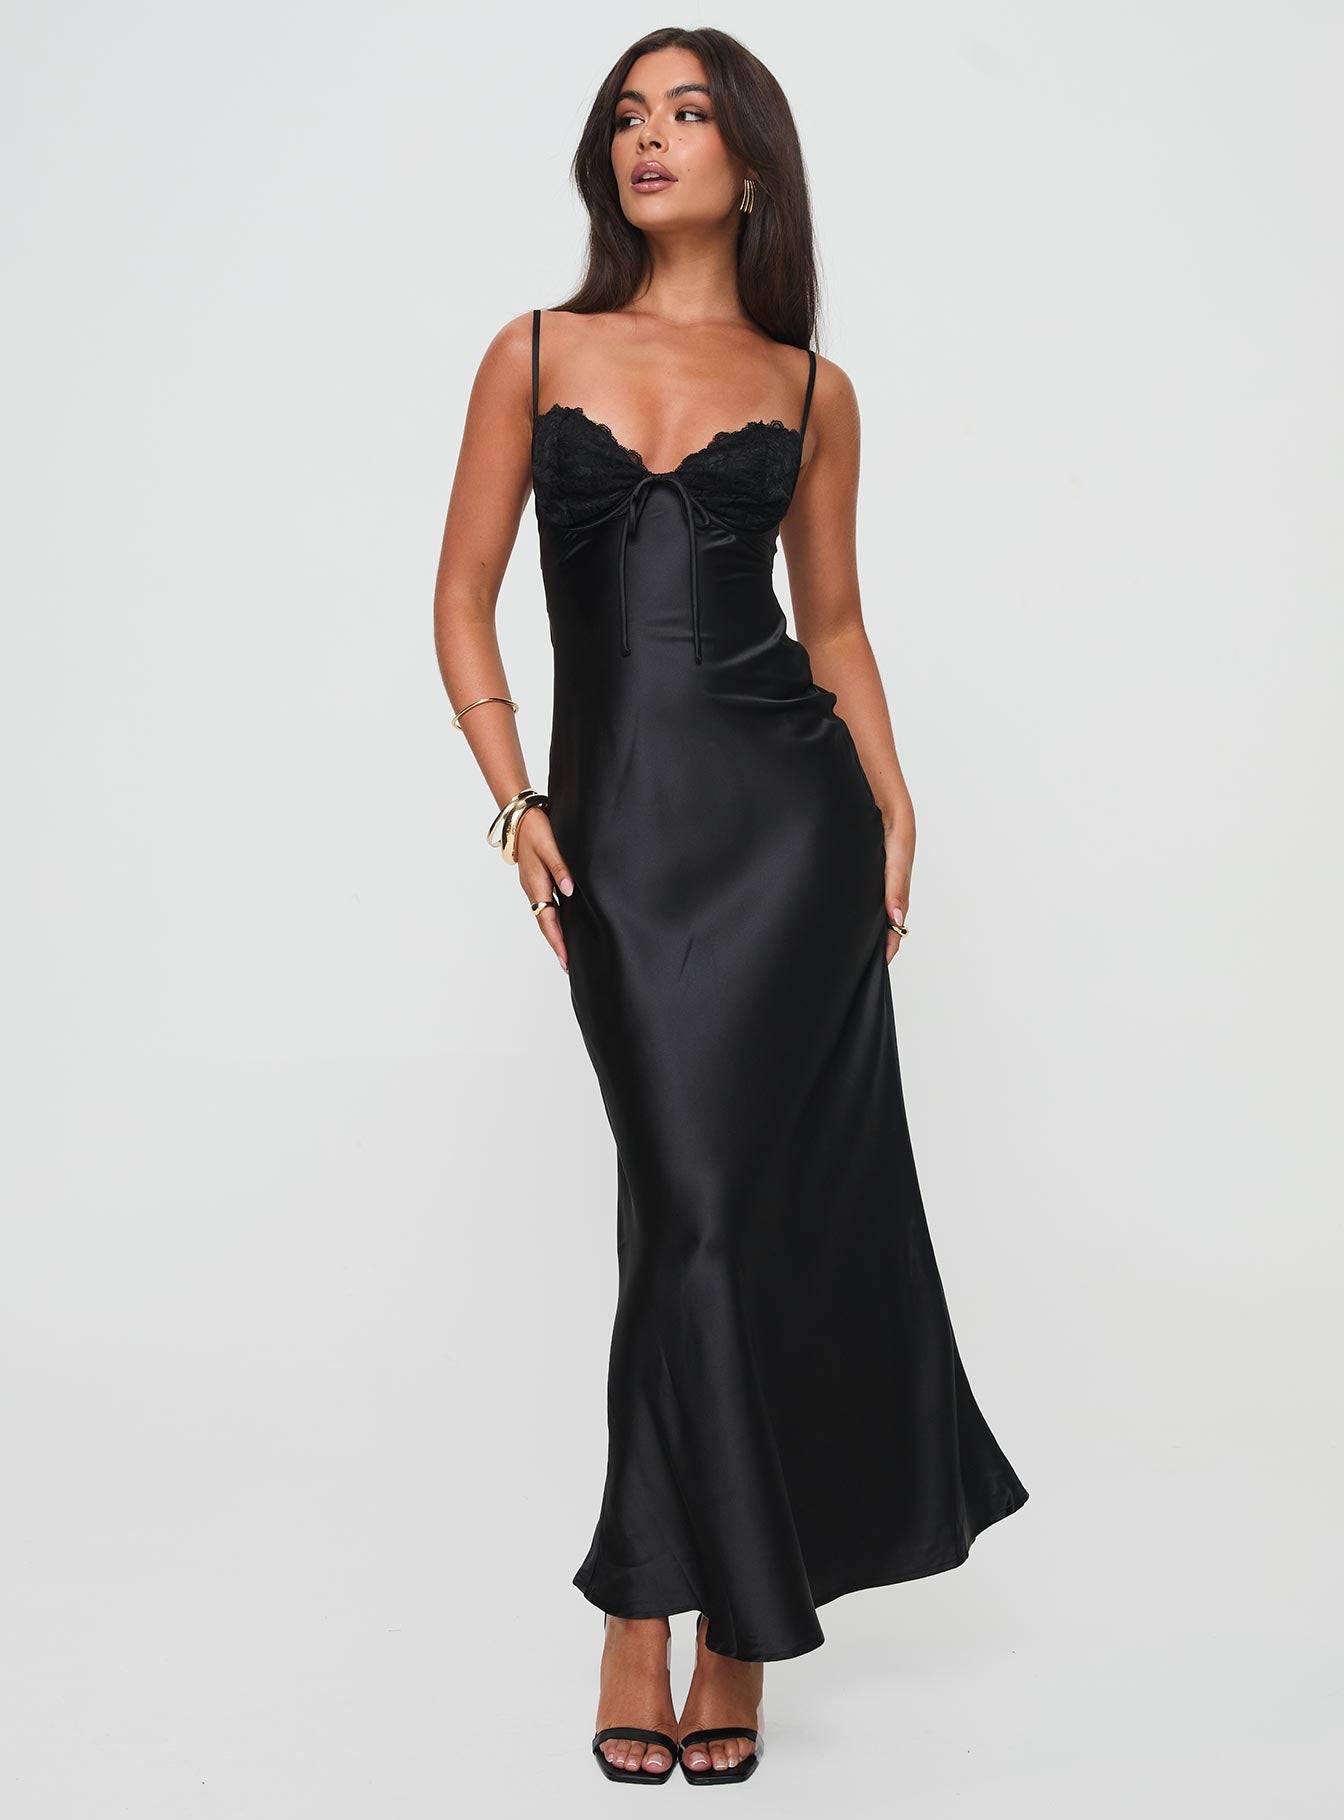 Shop Formal Dress - Fadyen Bias Cut Maxi Dress Black fourth image